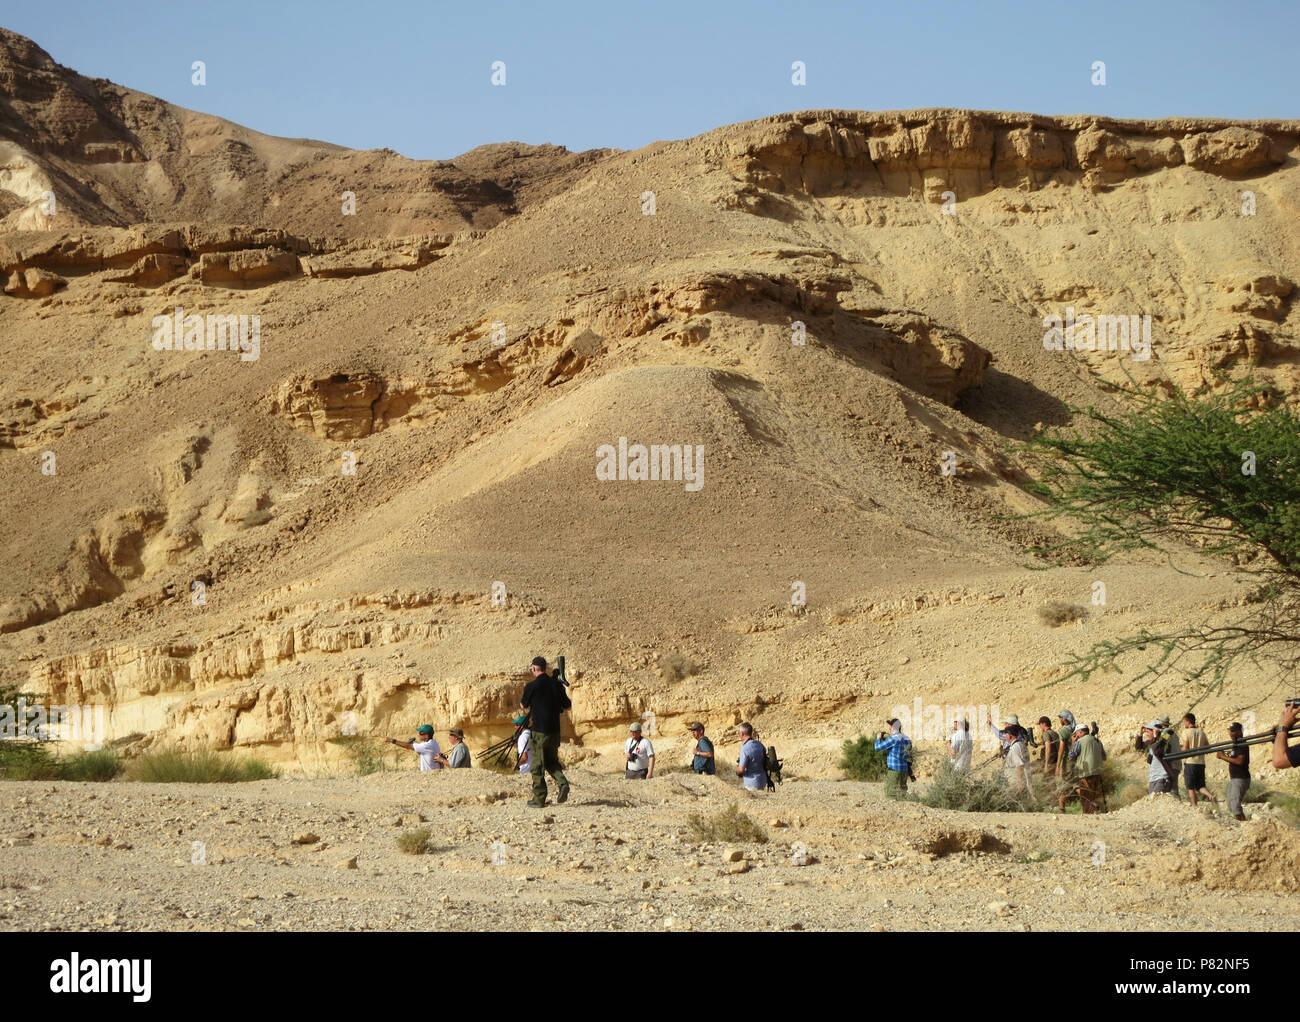 Vogelaars en een wadi dix noorden van Eilat Israel ; Les ornithologues dans un oued au nord d'Eilat, Israël Banque D'Images